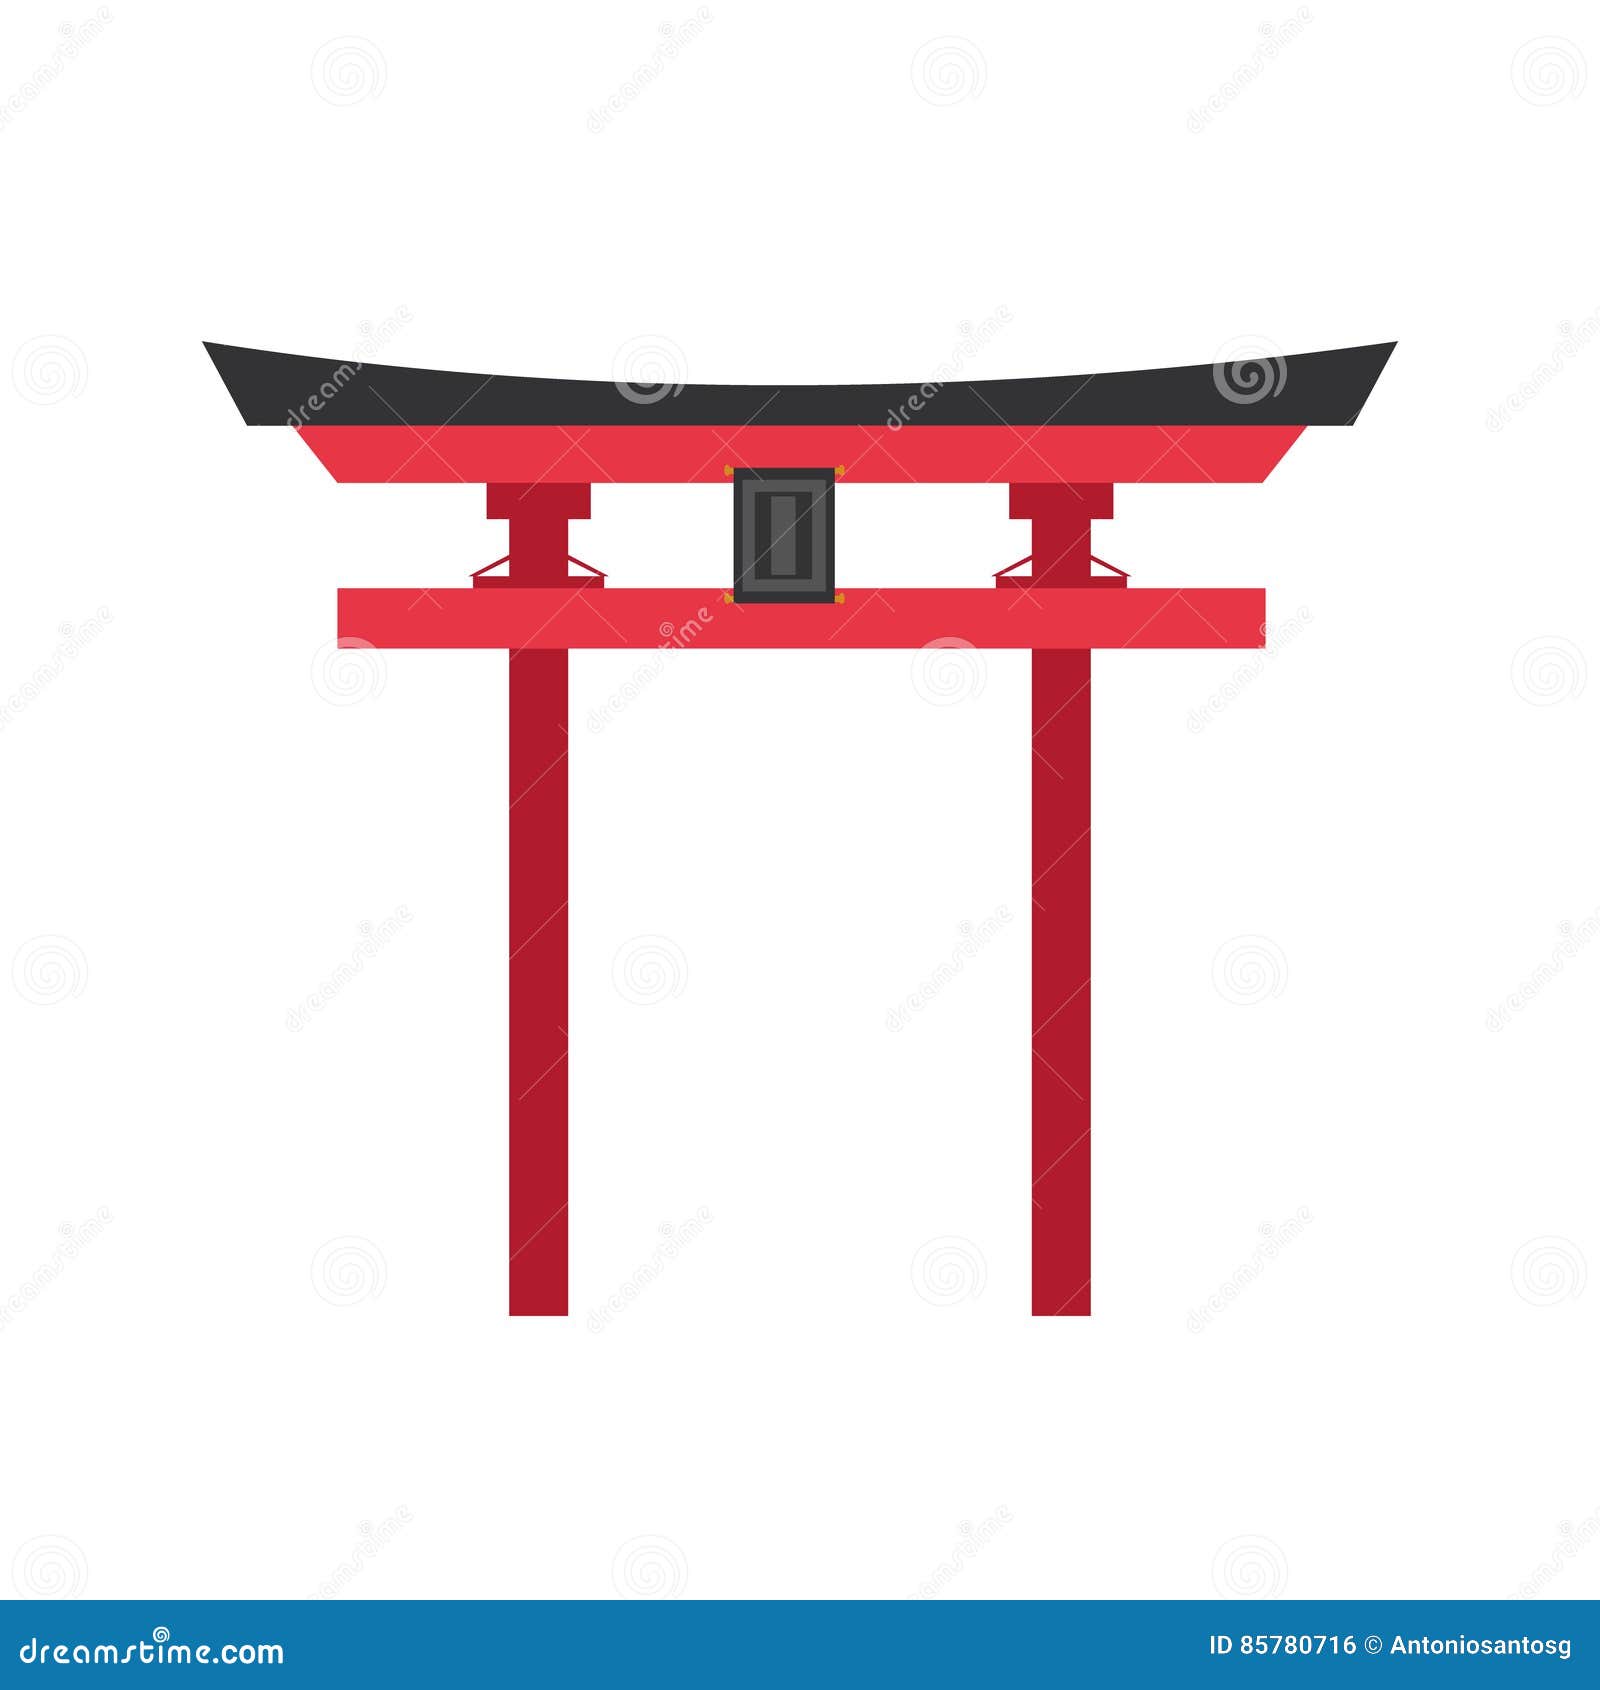 cute cartoon   of a shintoist torii gate